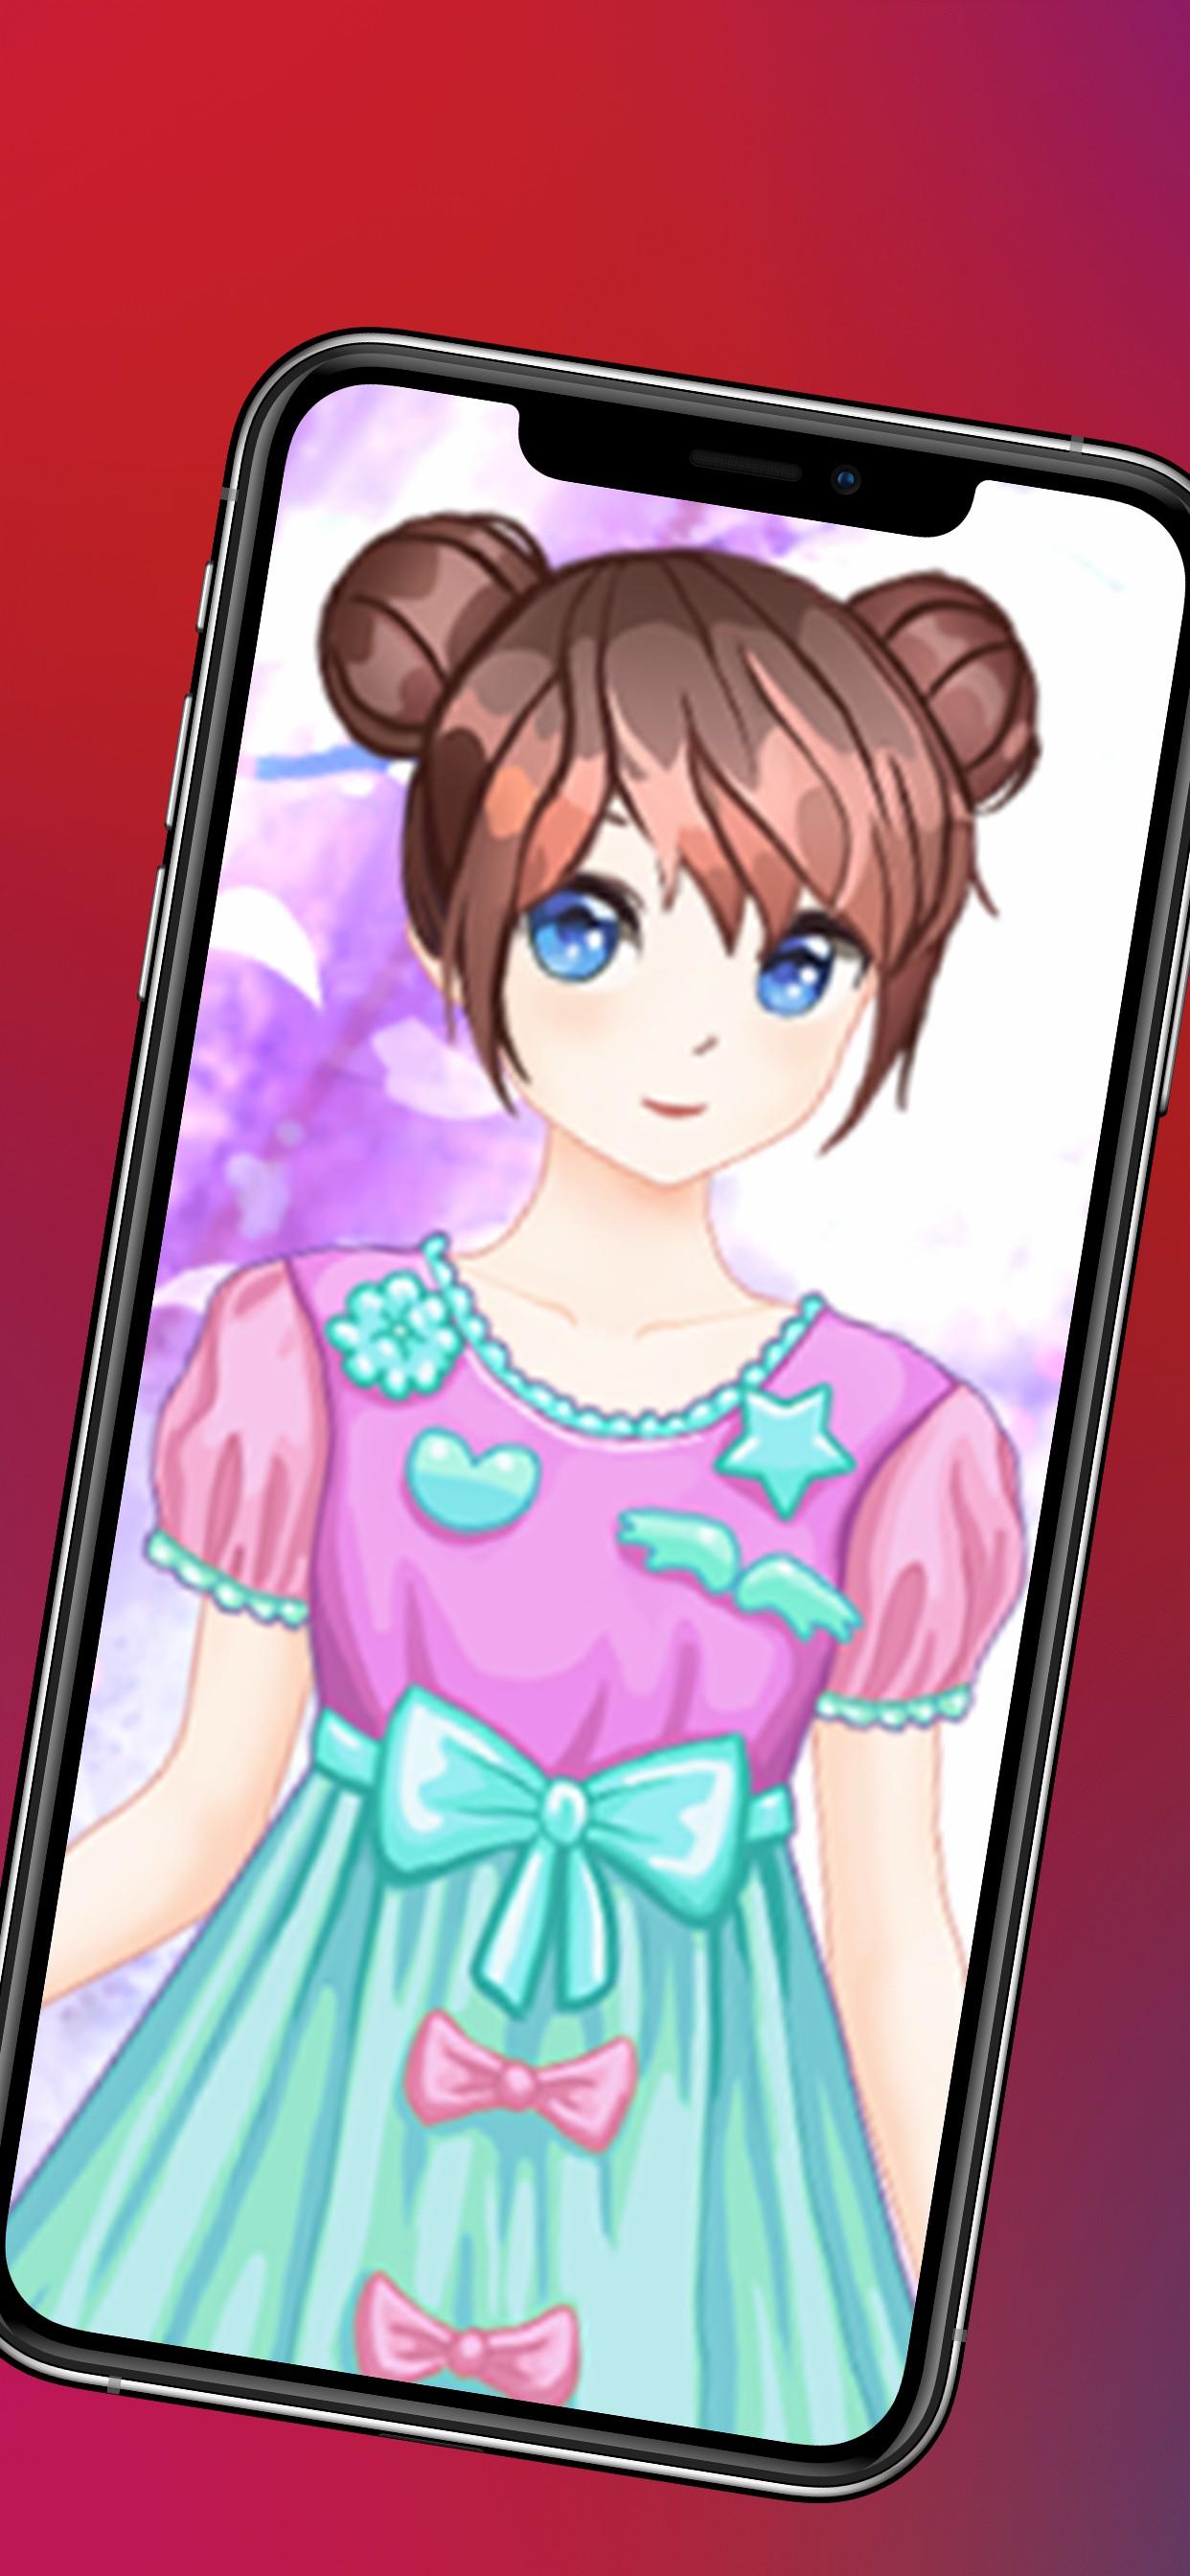 Download do APK de Jogo de Vestir Menina Famosa para Android